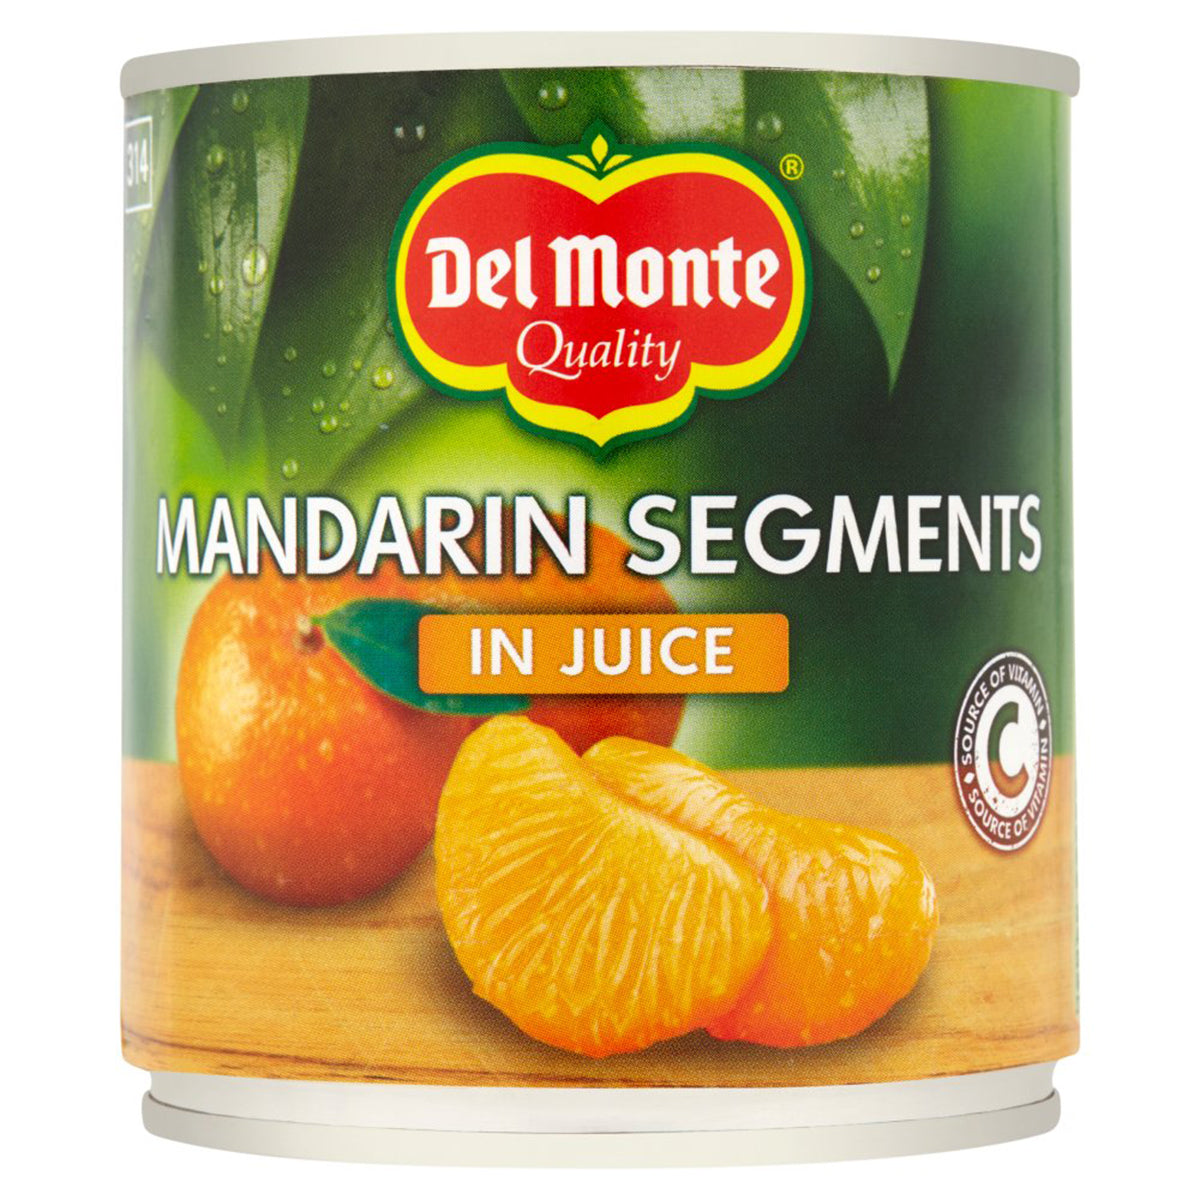 Del Monte - Mandarin Segments in Juice - 300g - Continental Food Store